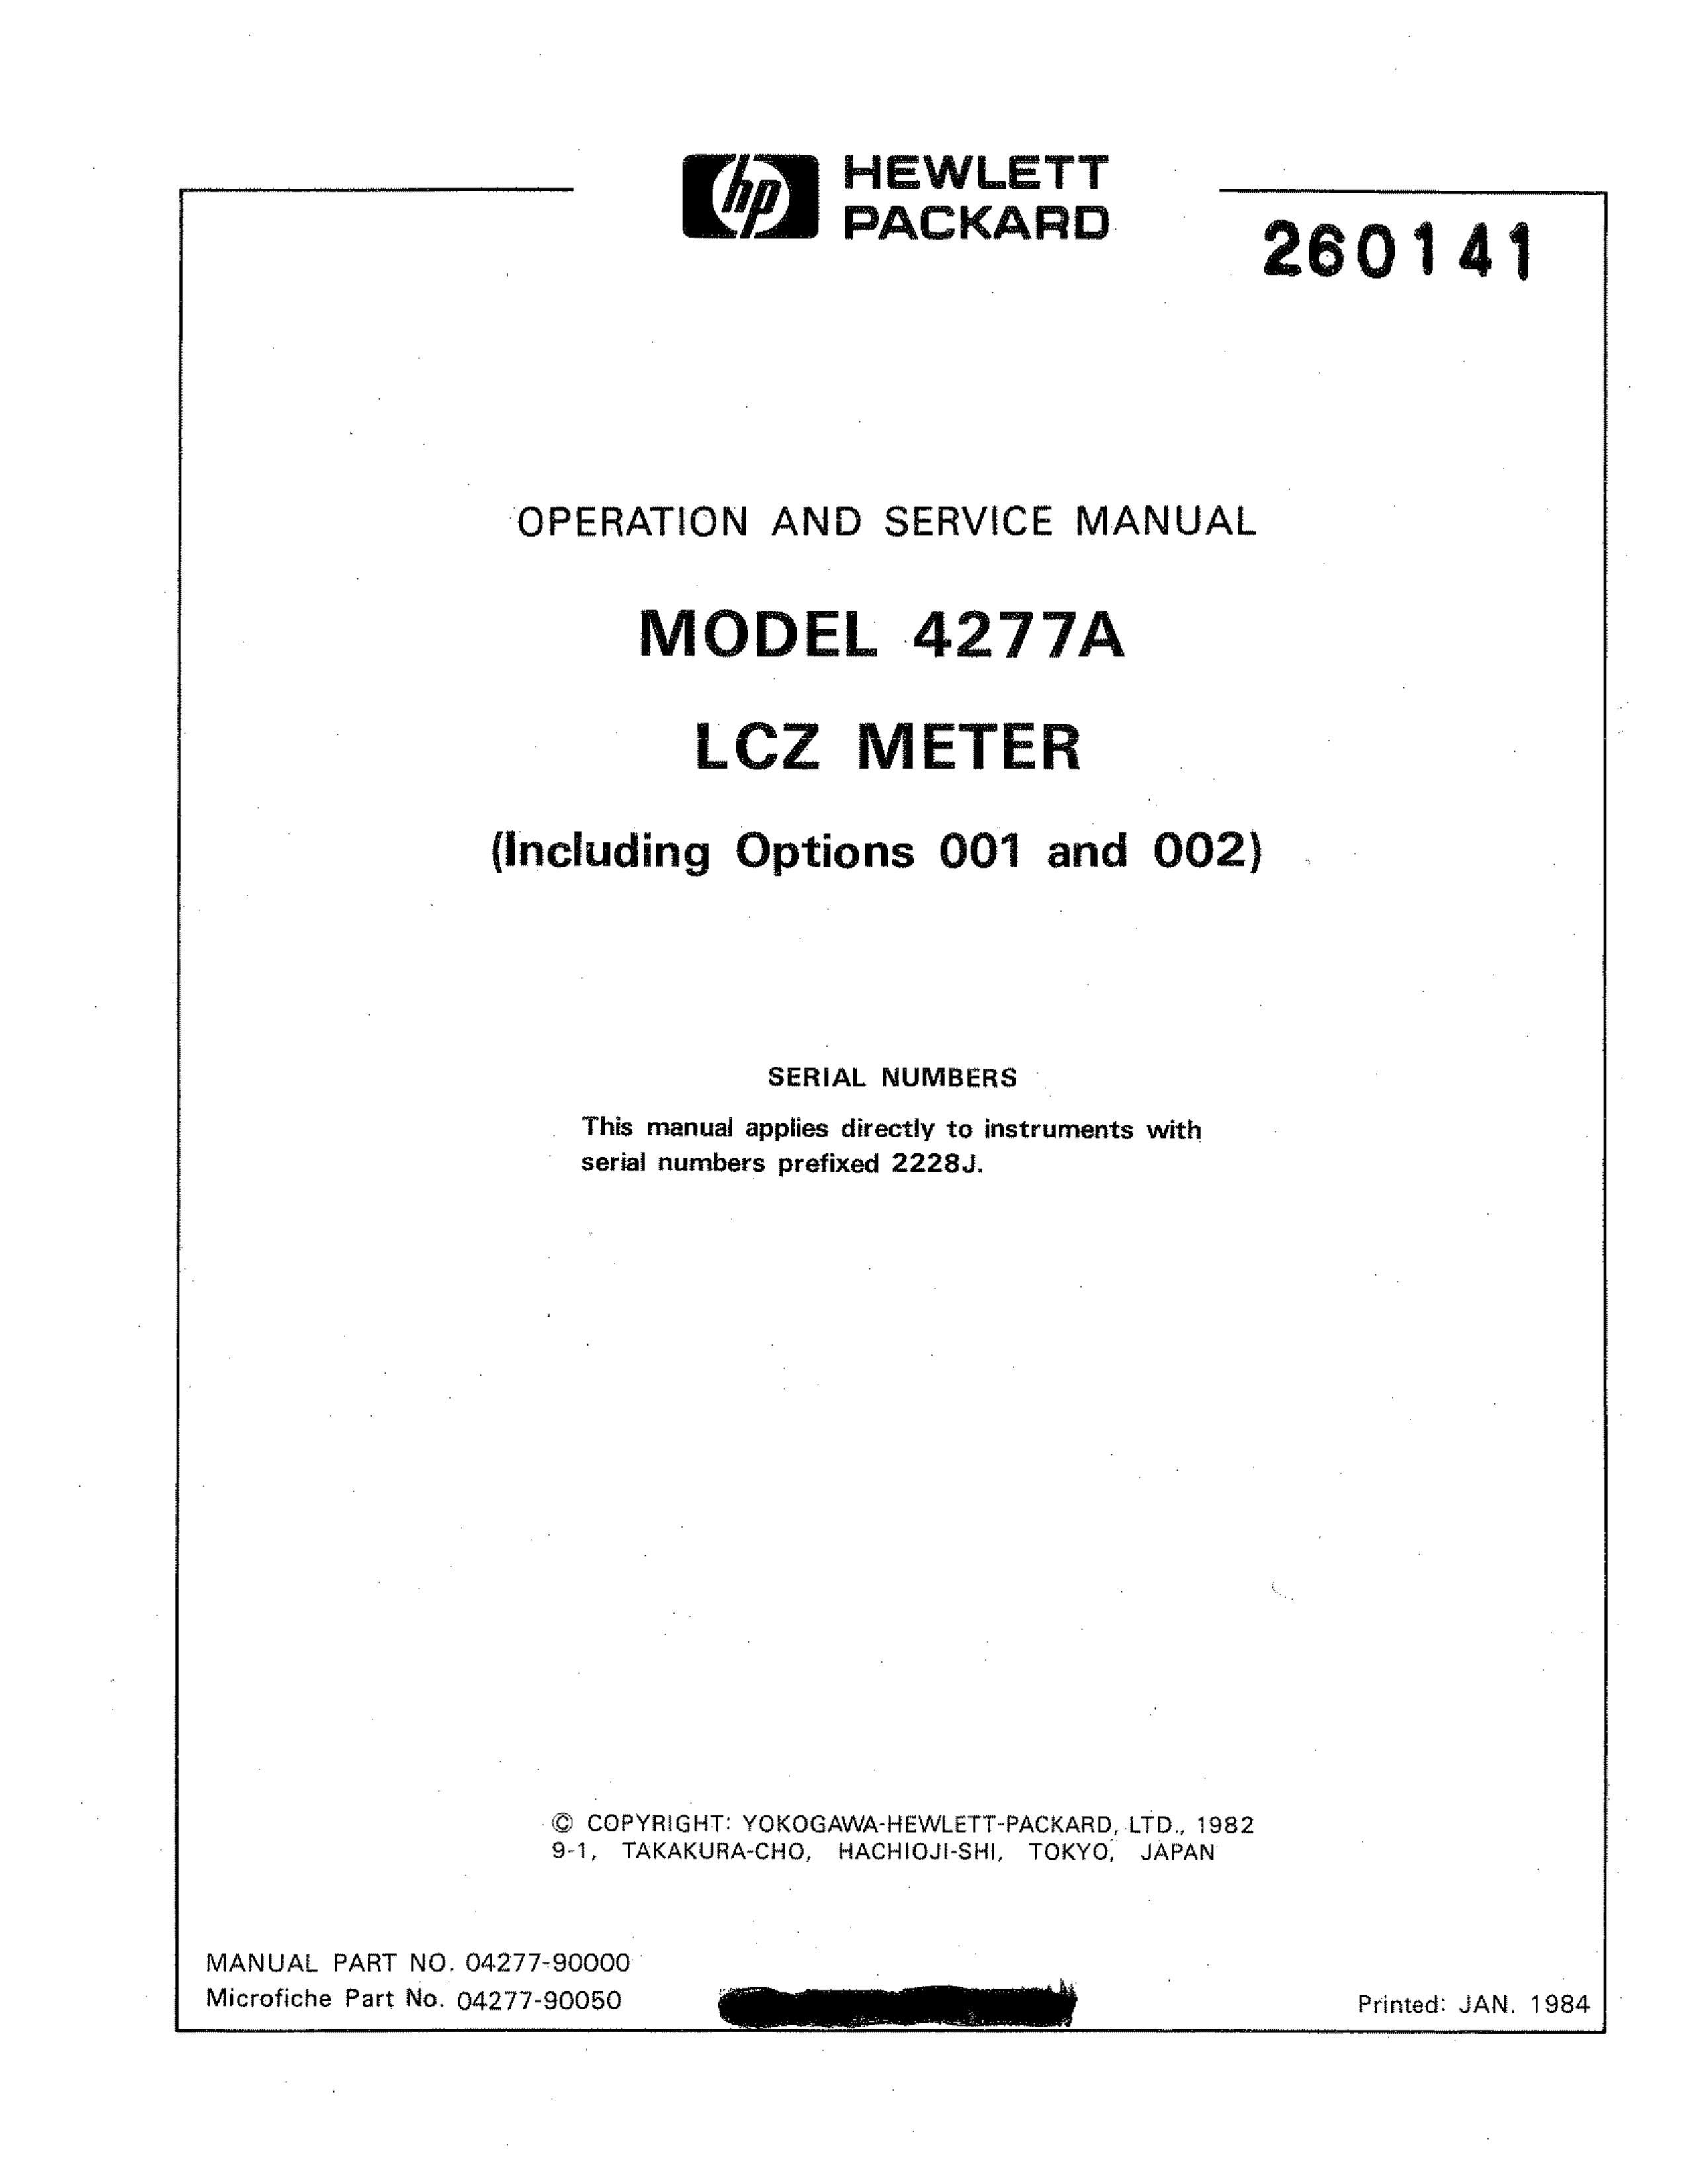 HP (Hewlett-Packard) 4277a Weather Radio User Manual